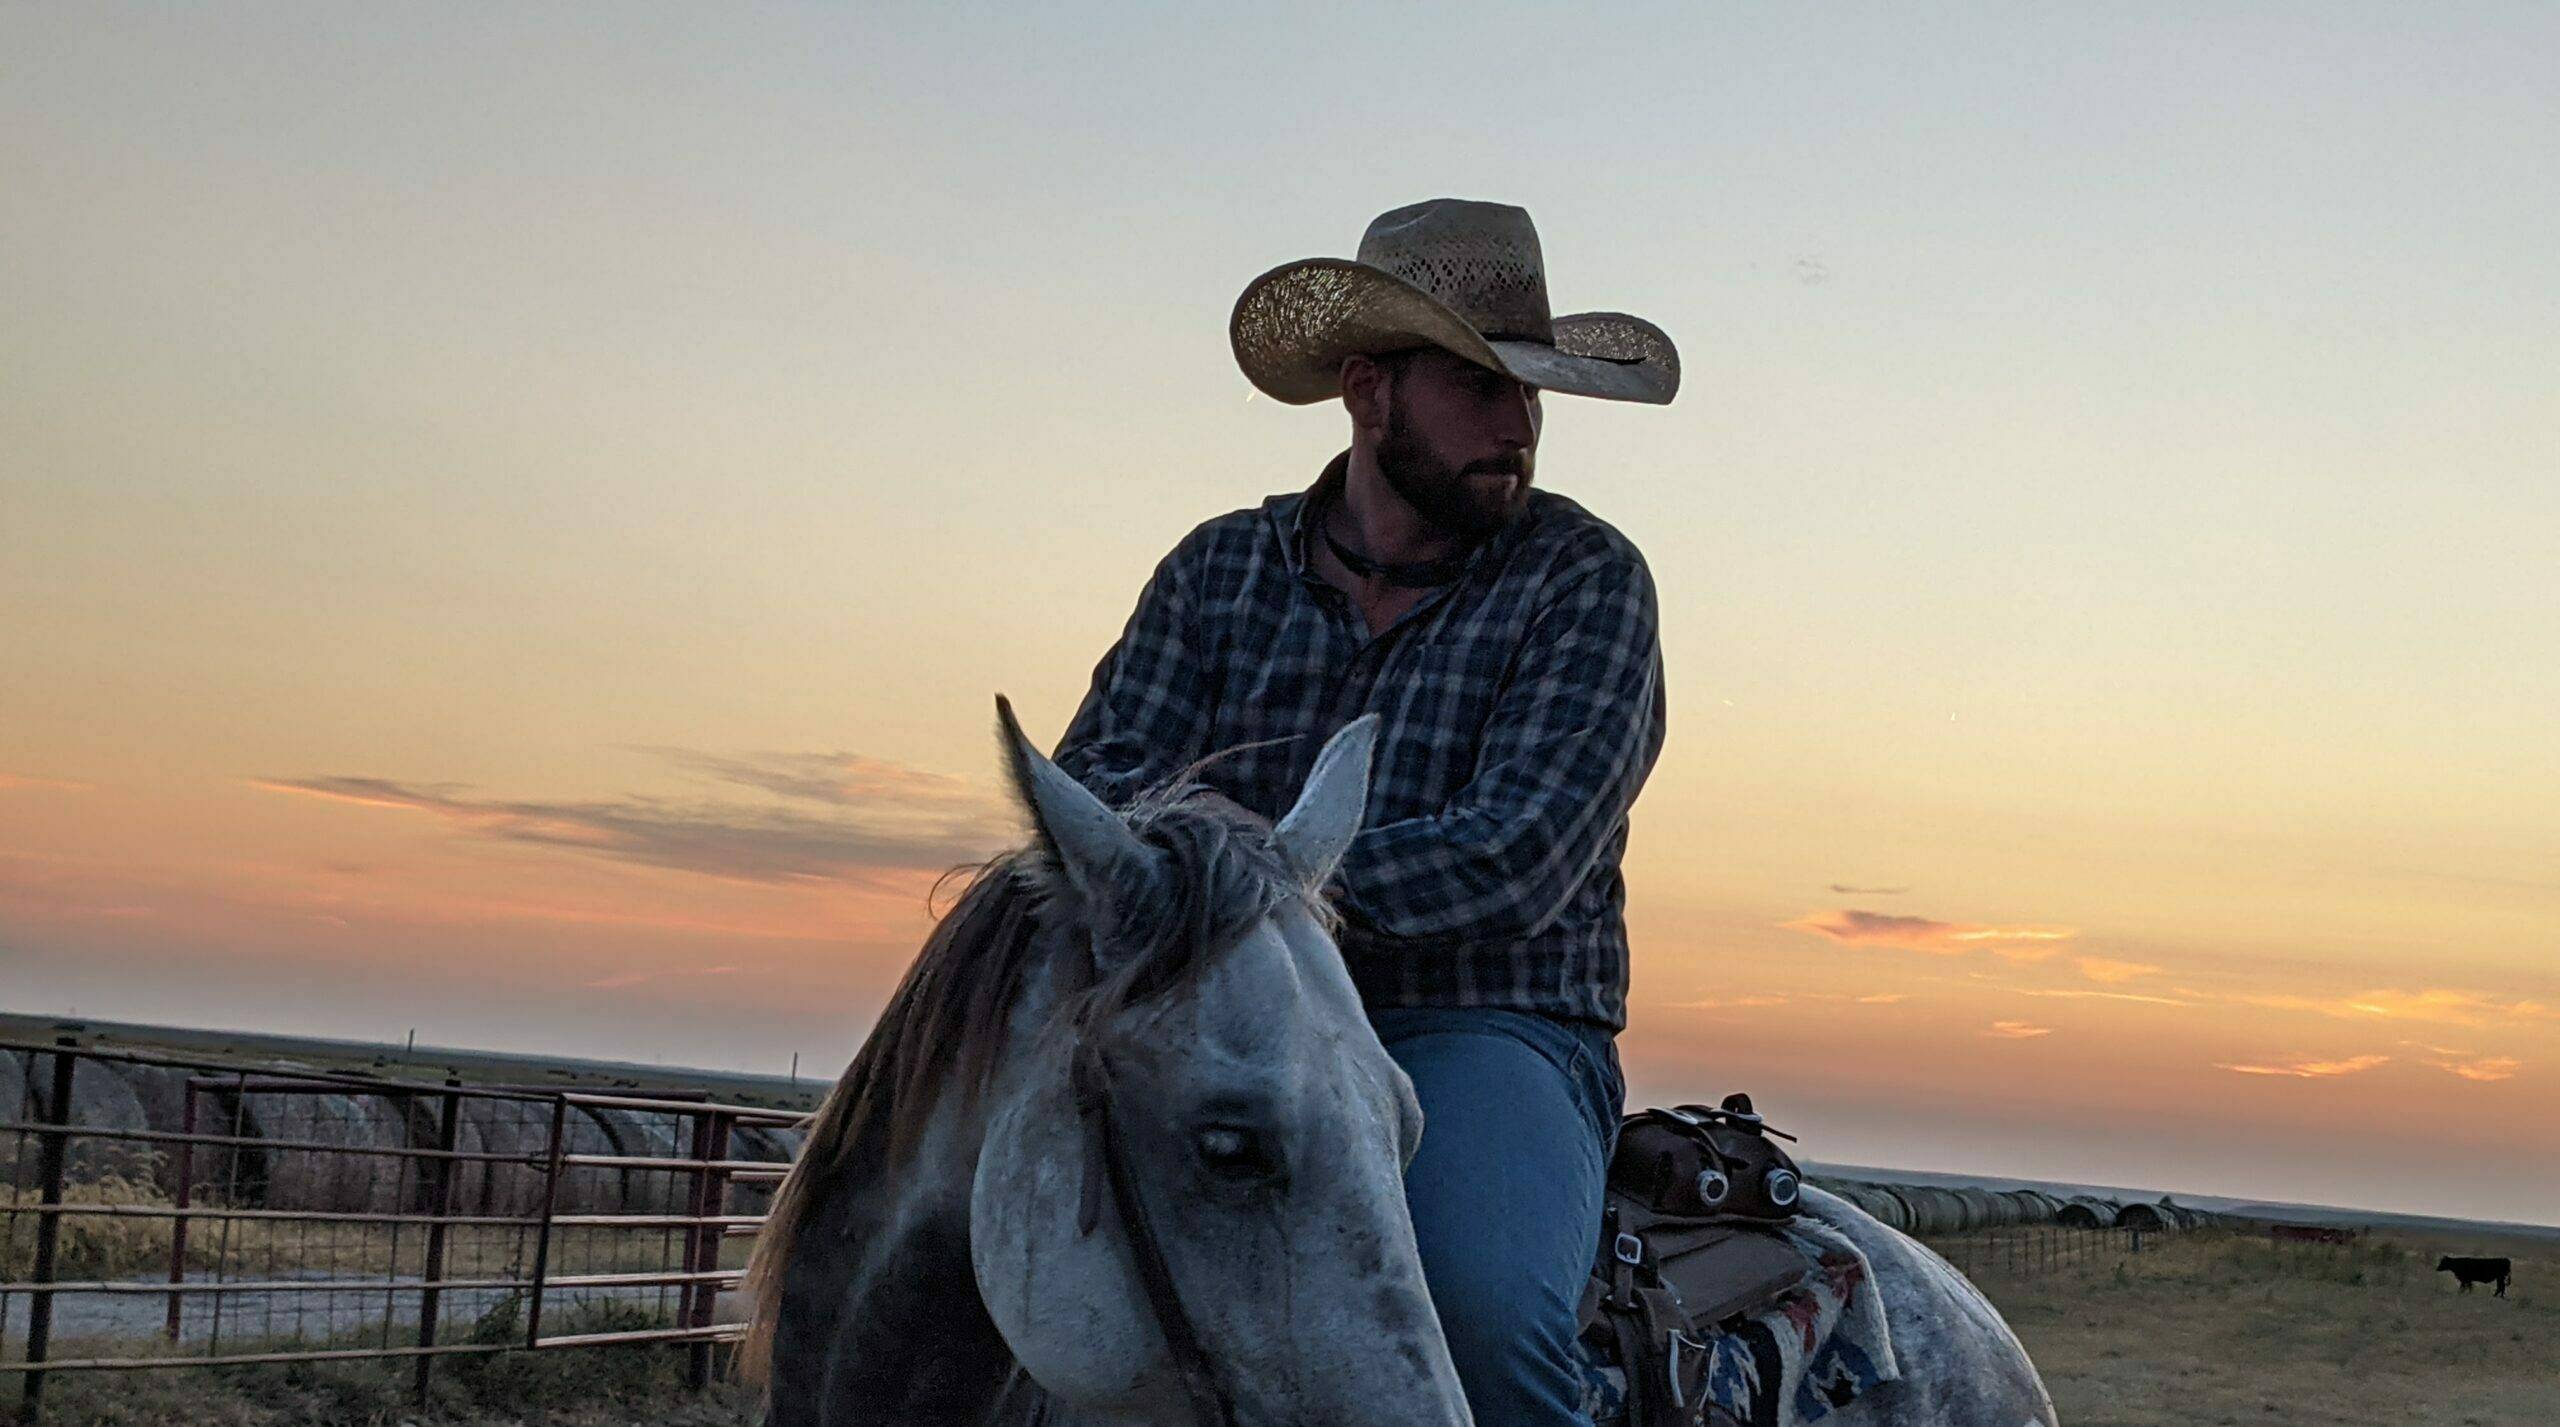 Ranch employee on horseback